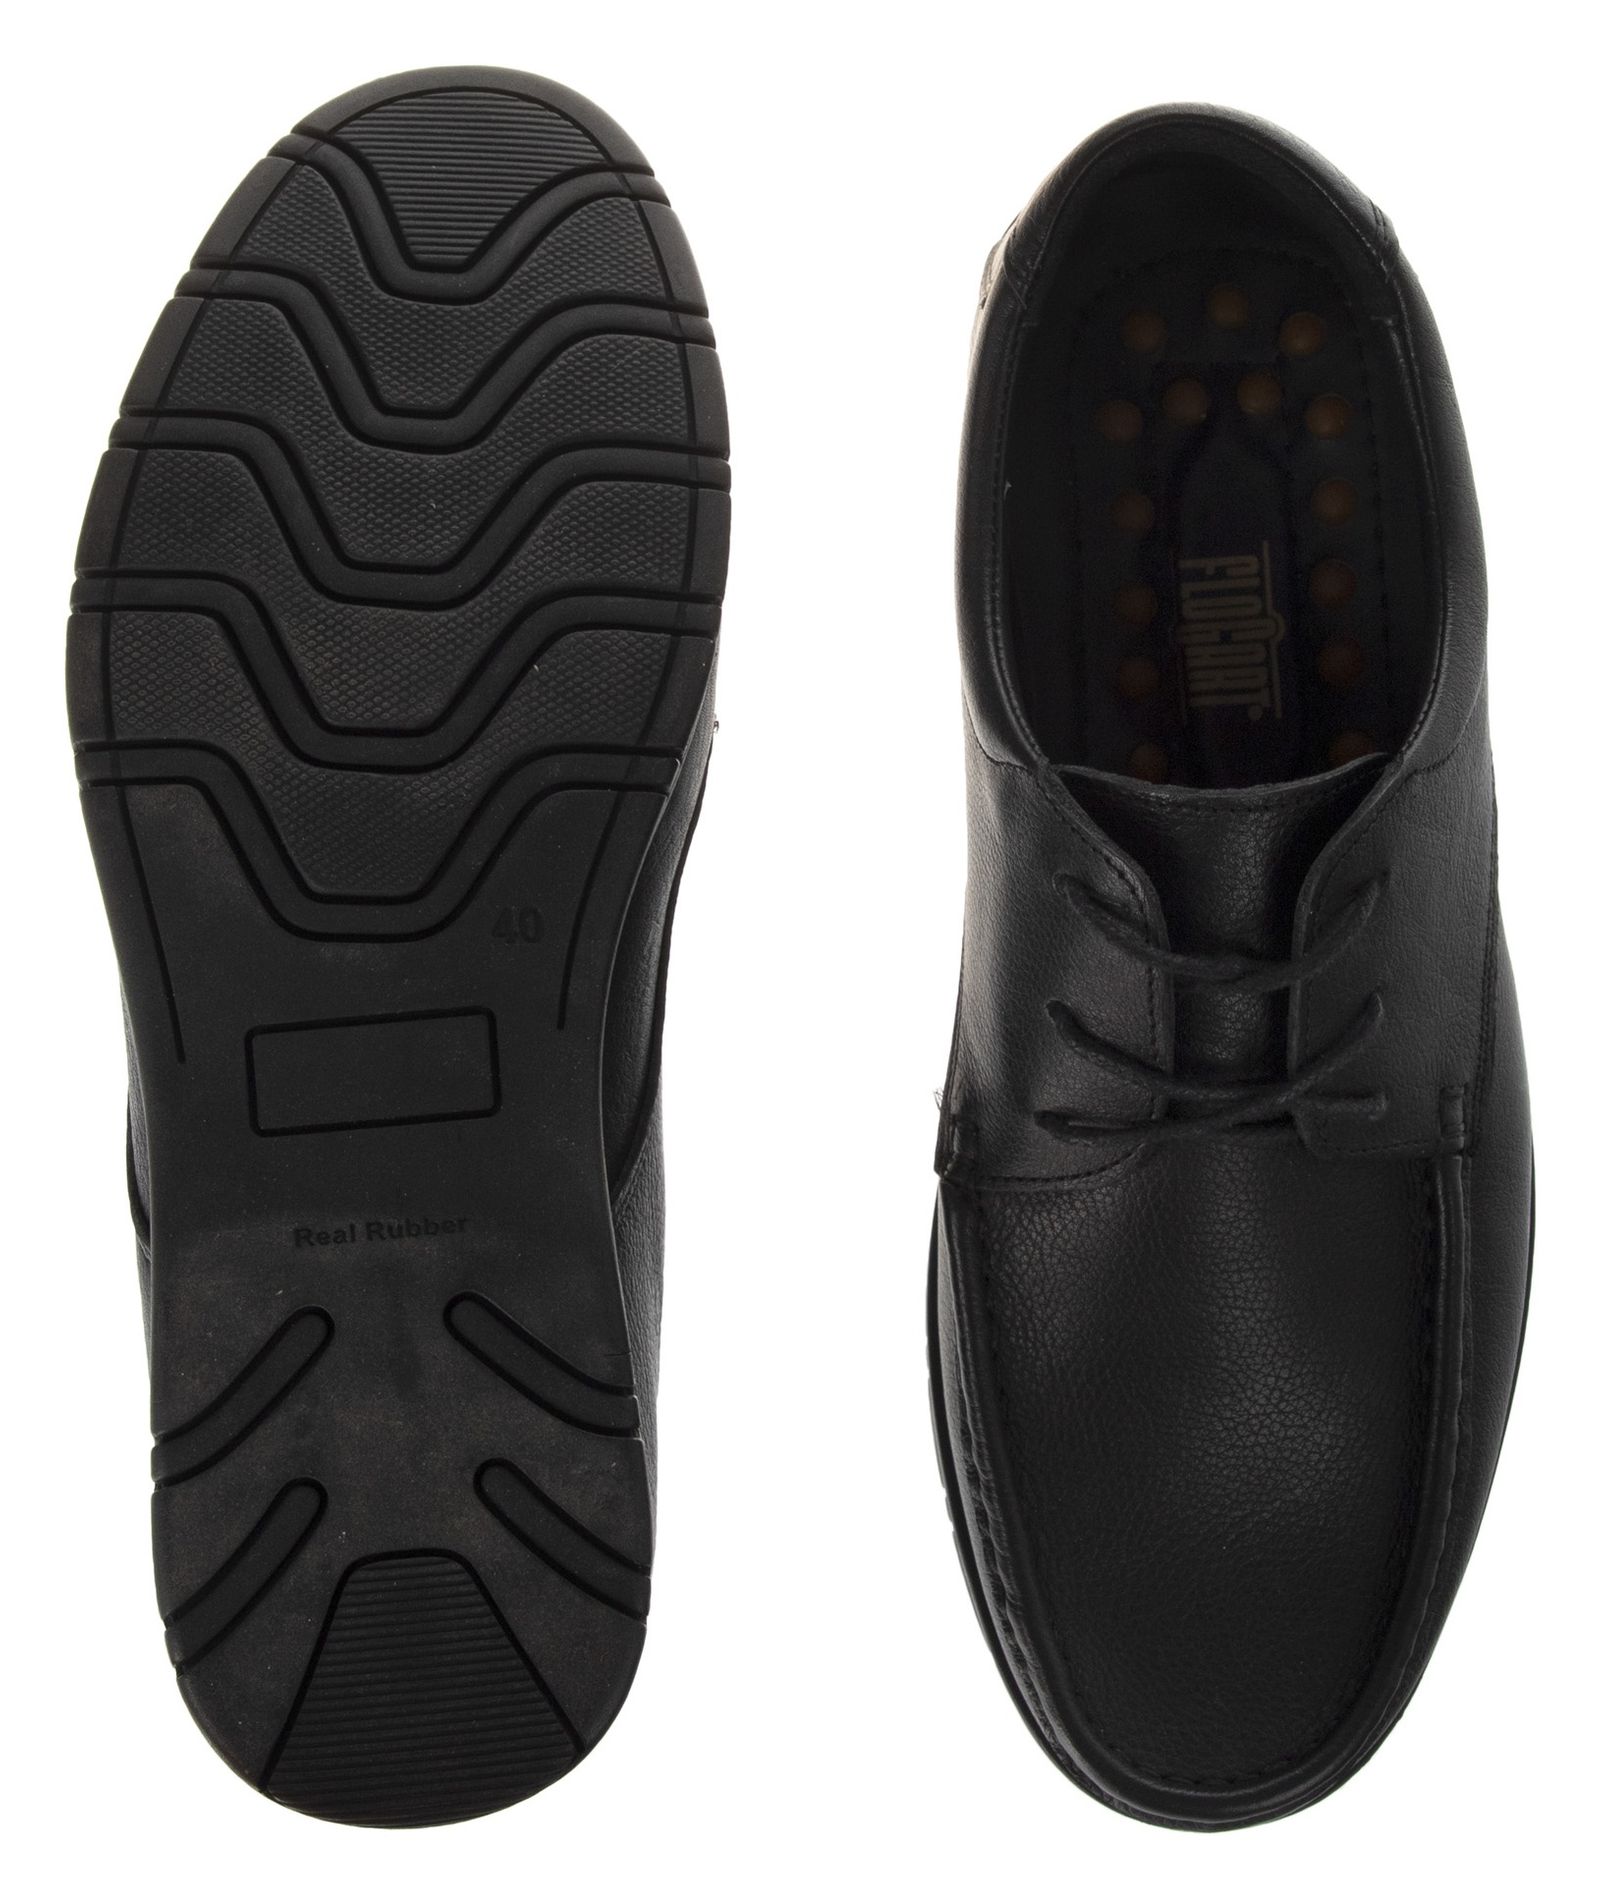 کفش روزمره مردانه فلوگارت مدل 100317181-101 - مشکی - 6